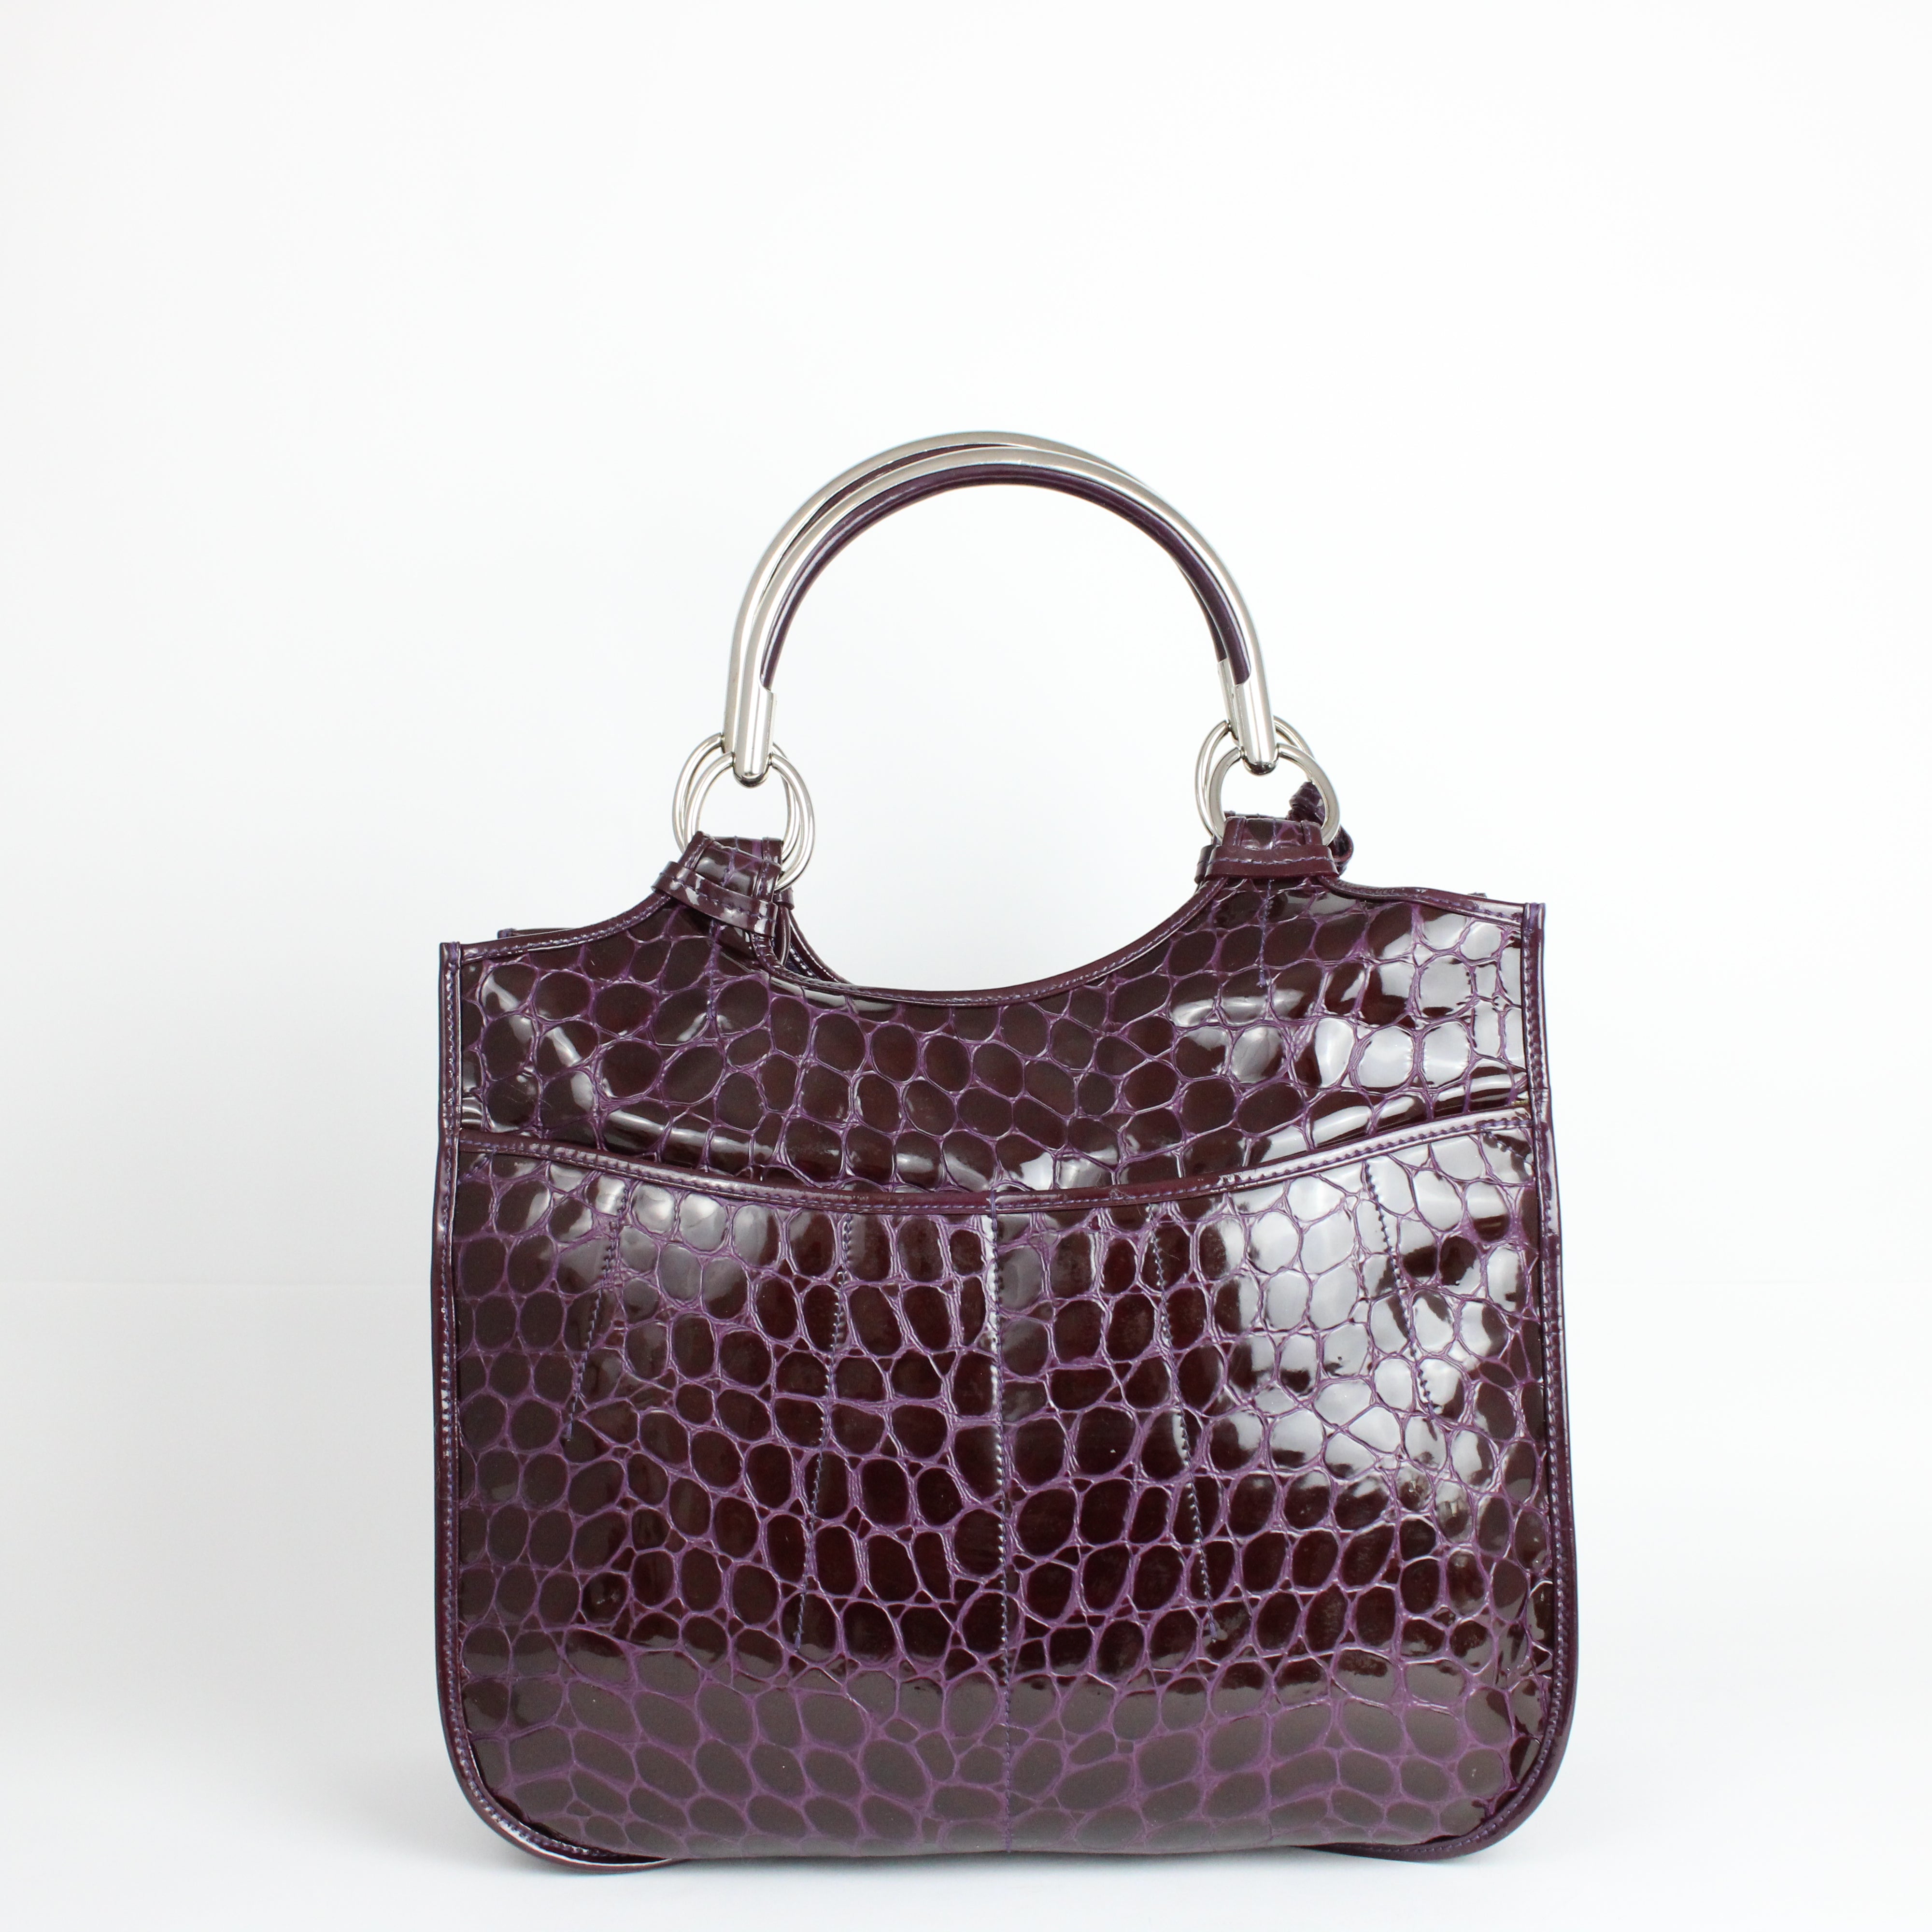 Christian Dior Bag 61 With Bordeaux Crocodile Print